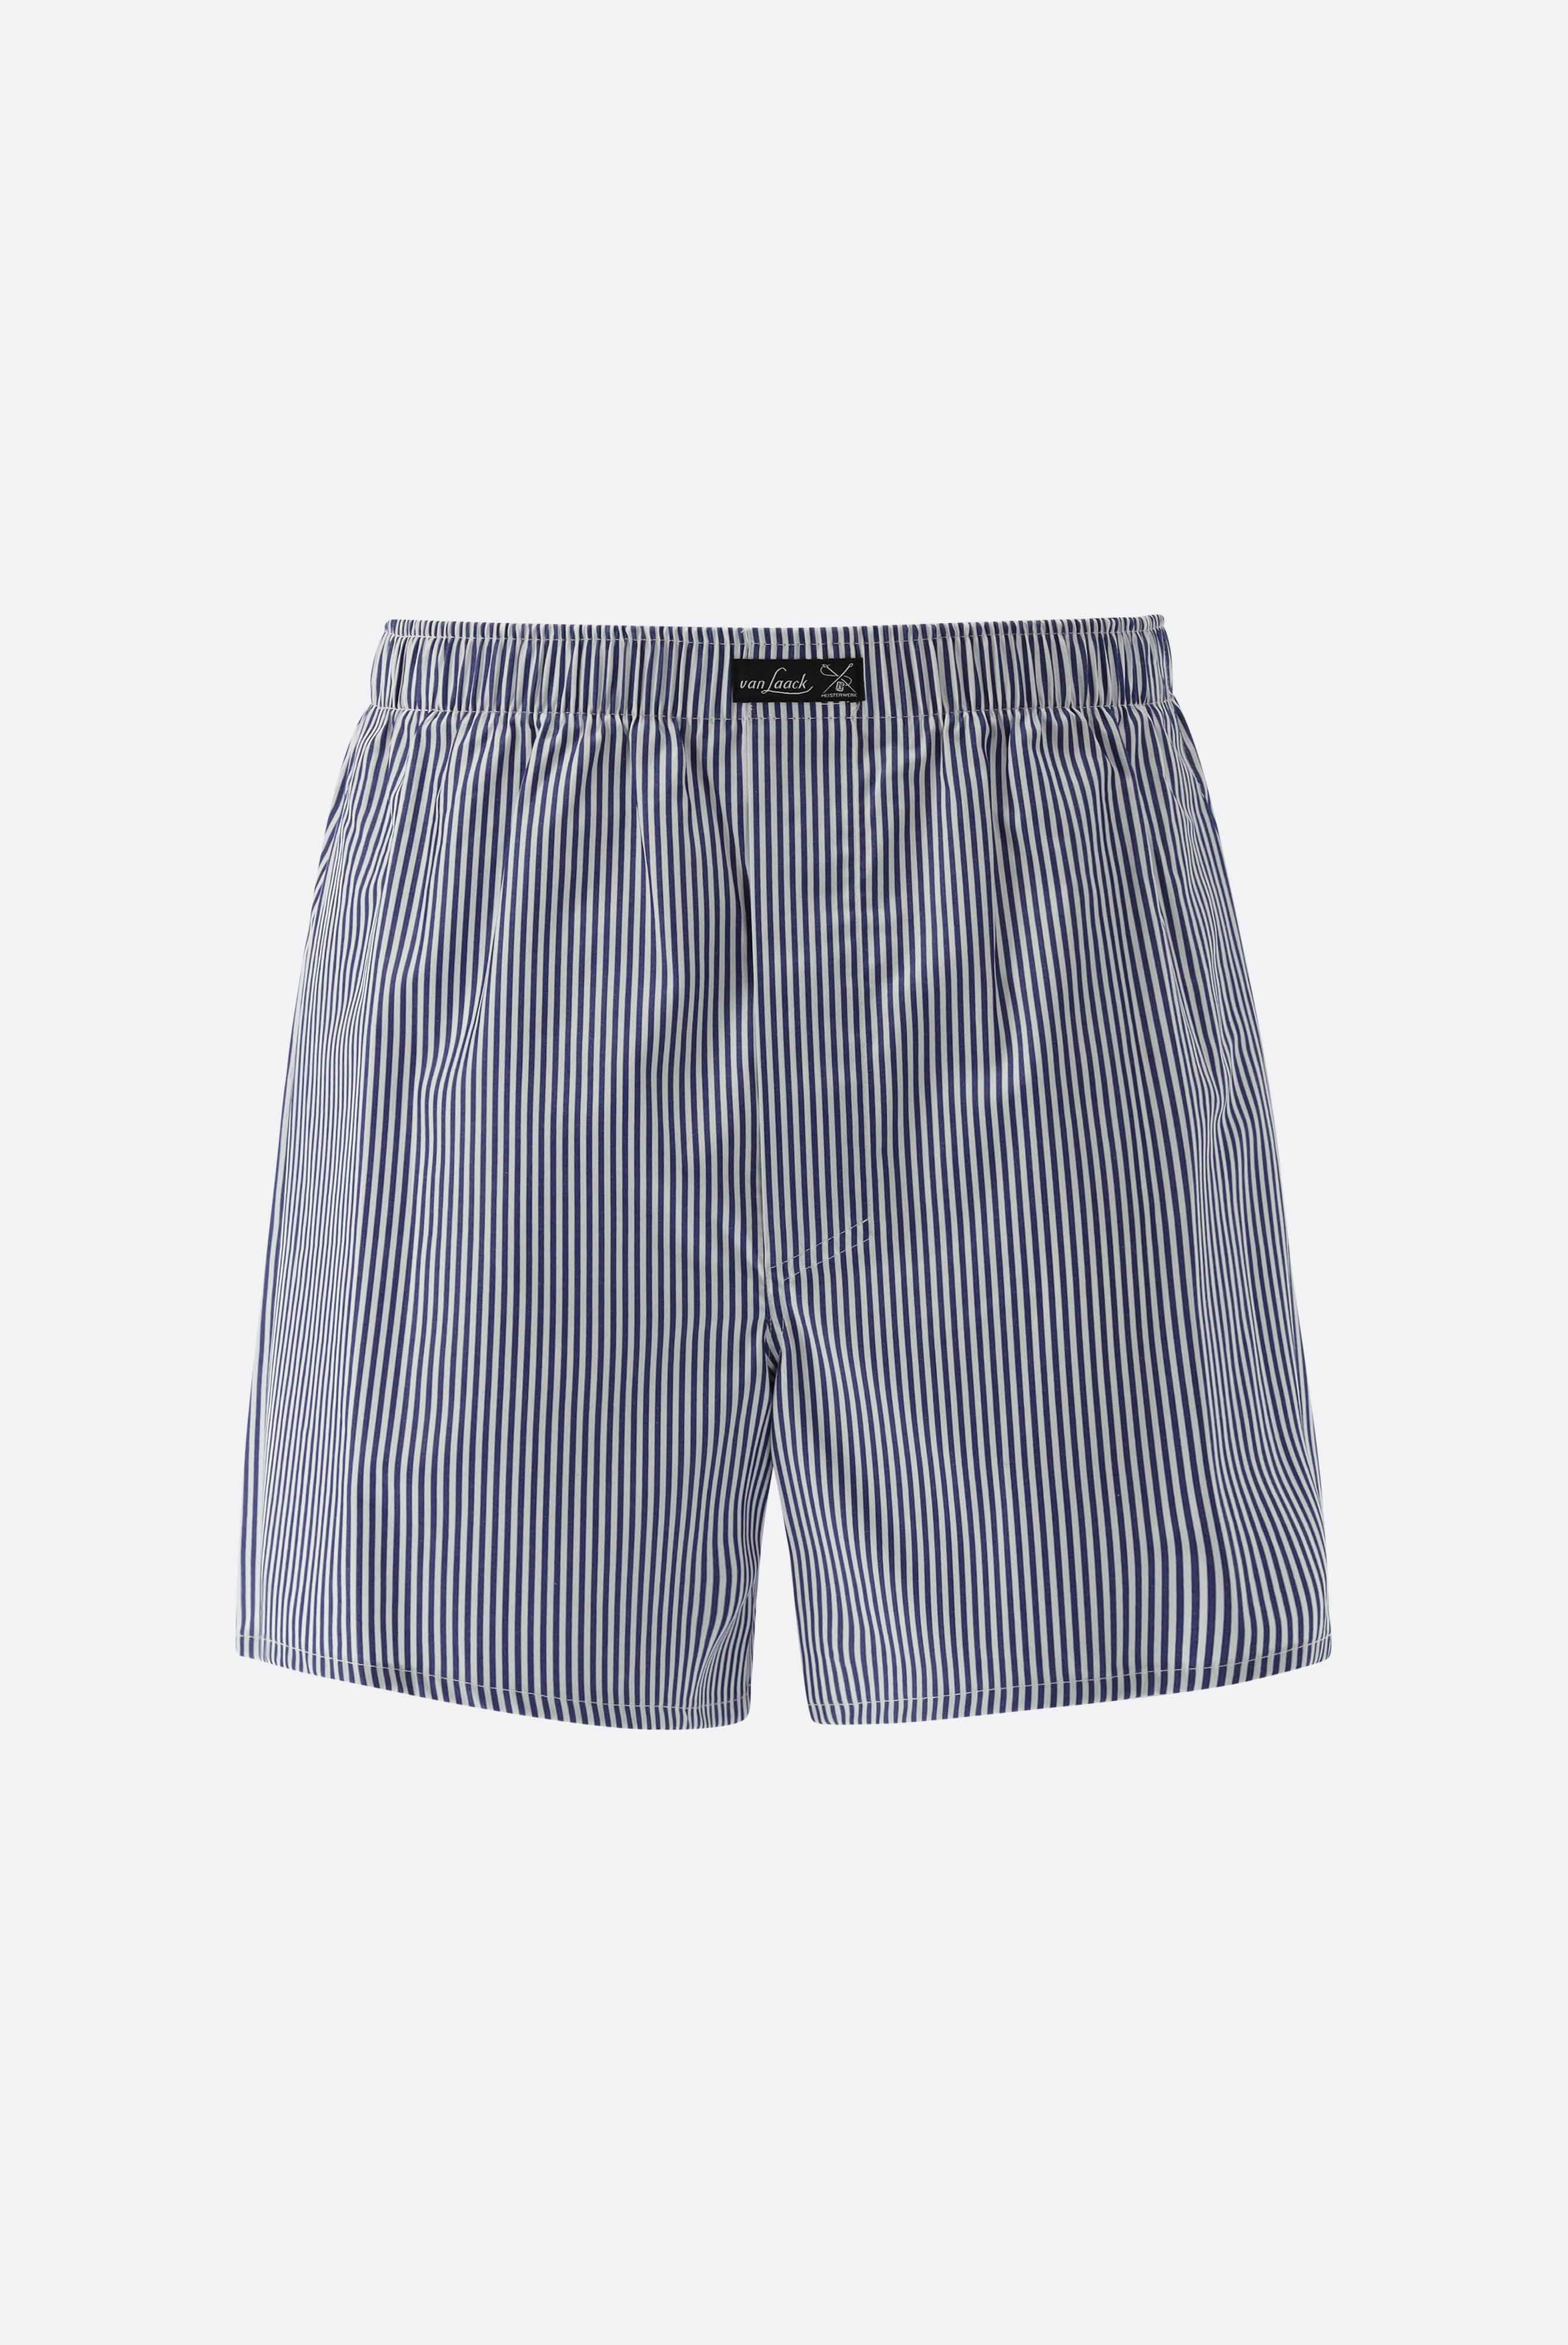 Underwear+Striped Two-Ply Poplin Boxer Shorts+91.1100..151053.780.46